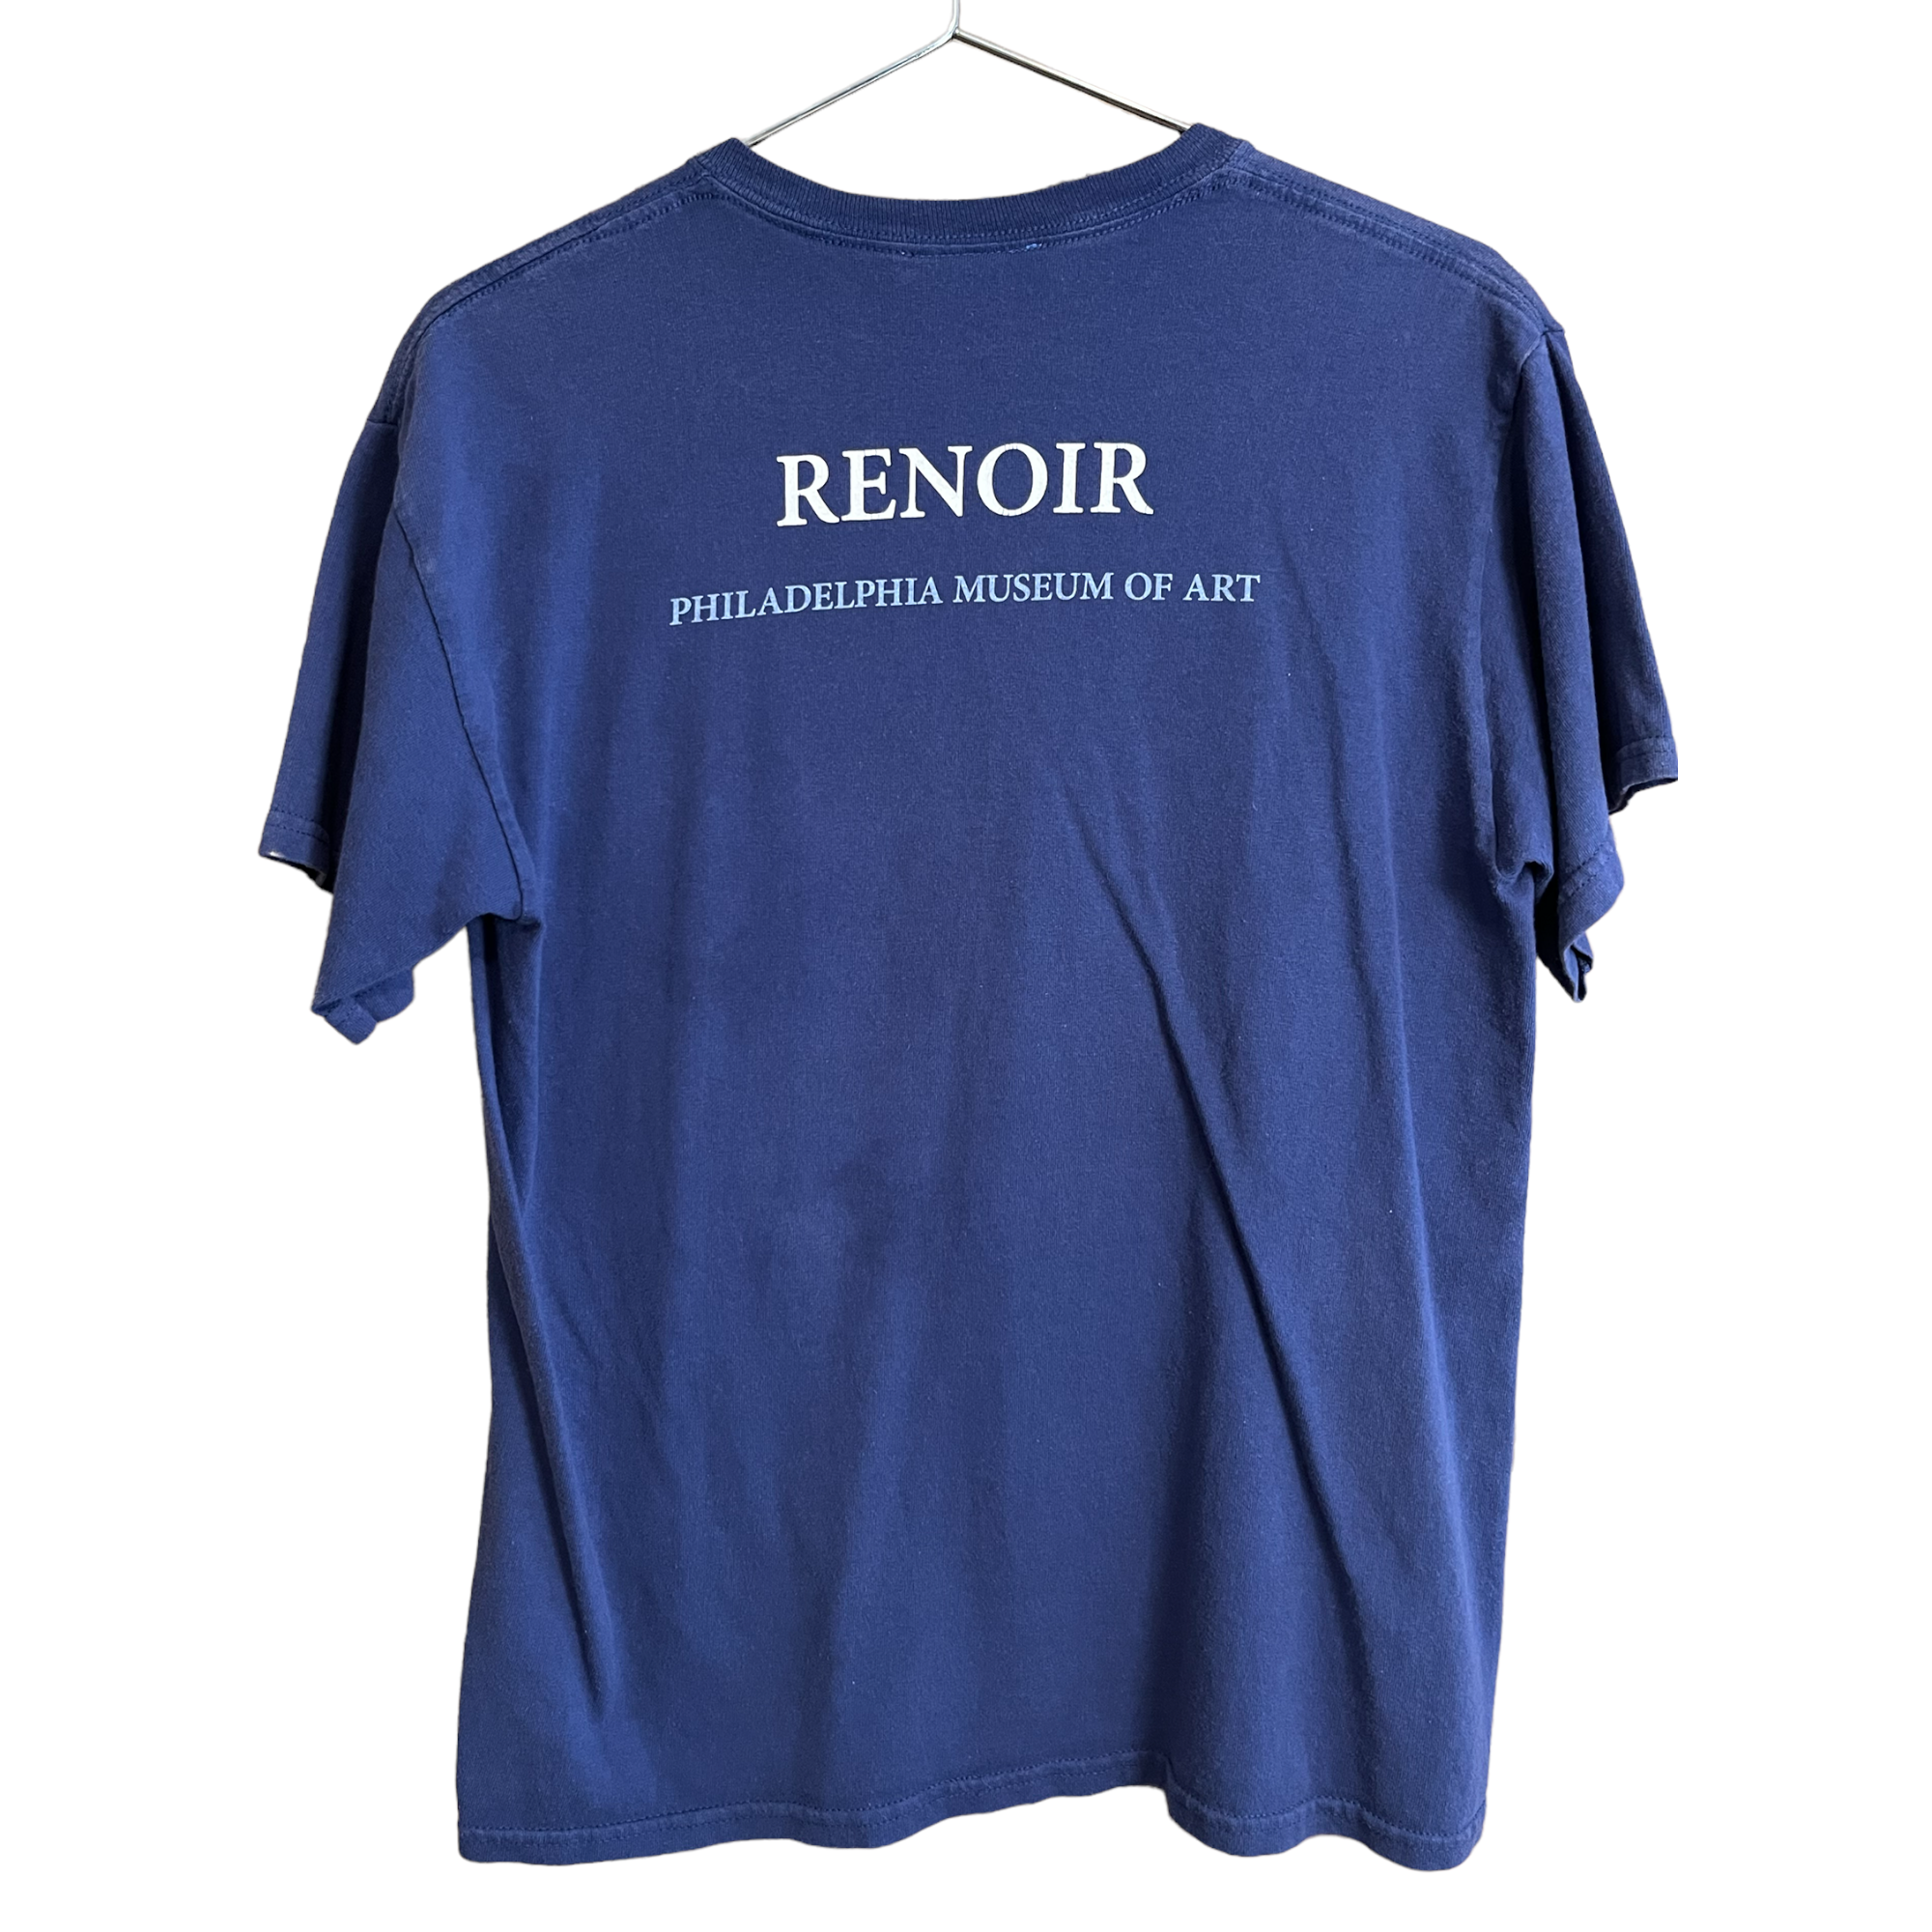 Renoir ‘The Skiff’ Philadelphia Museum of Art 90s T-Shirt - Sapphire Blue - M